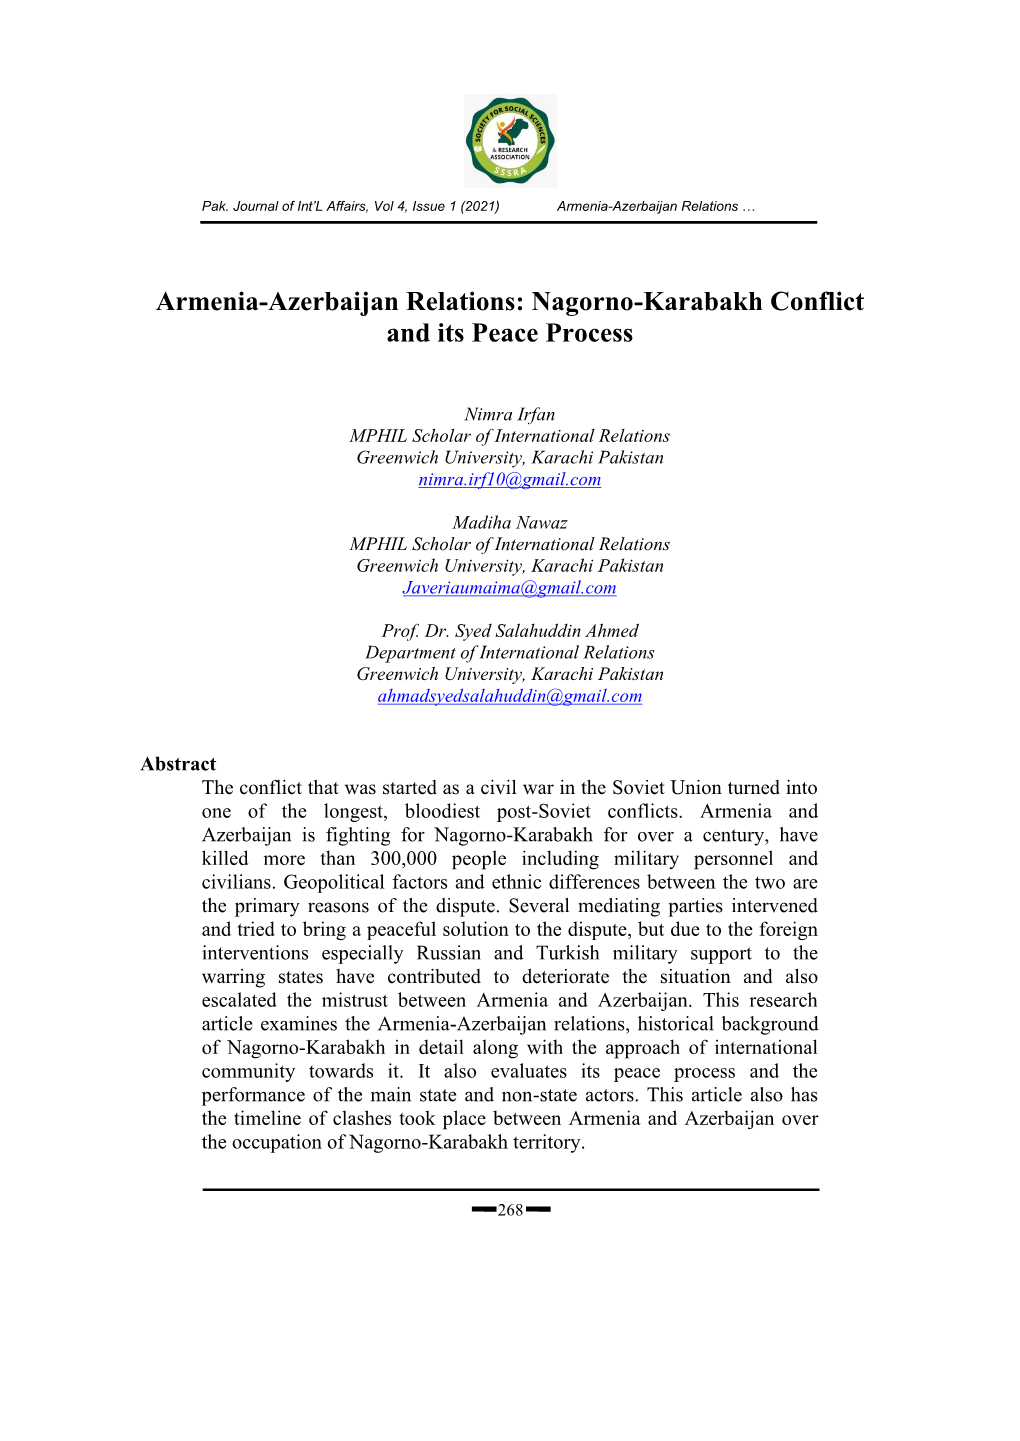 Nagorno-Karabakh Conflict and Its Peace Process